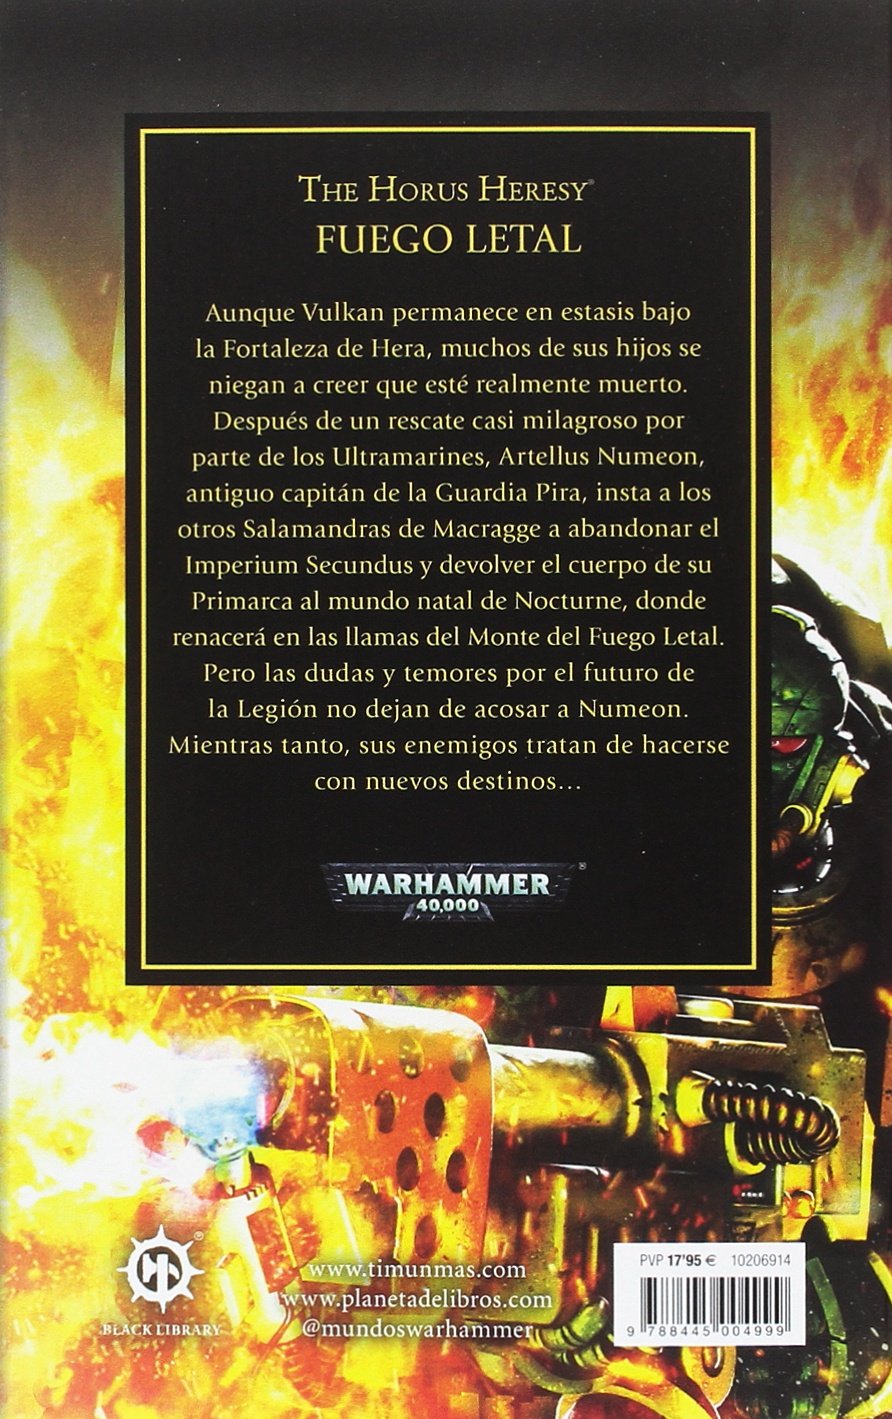 Libro: Fuego Letal, Dentro de la Tormenta de Ruina - Libro 32 de 54: Warhammer The Horus Heresy por Nick Kyme